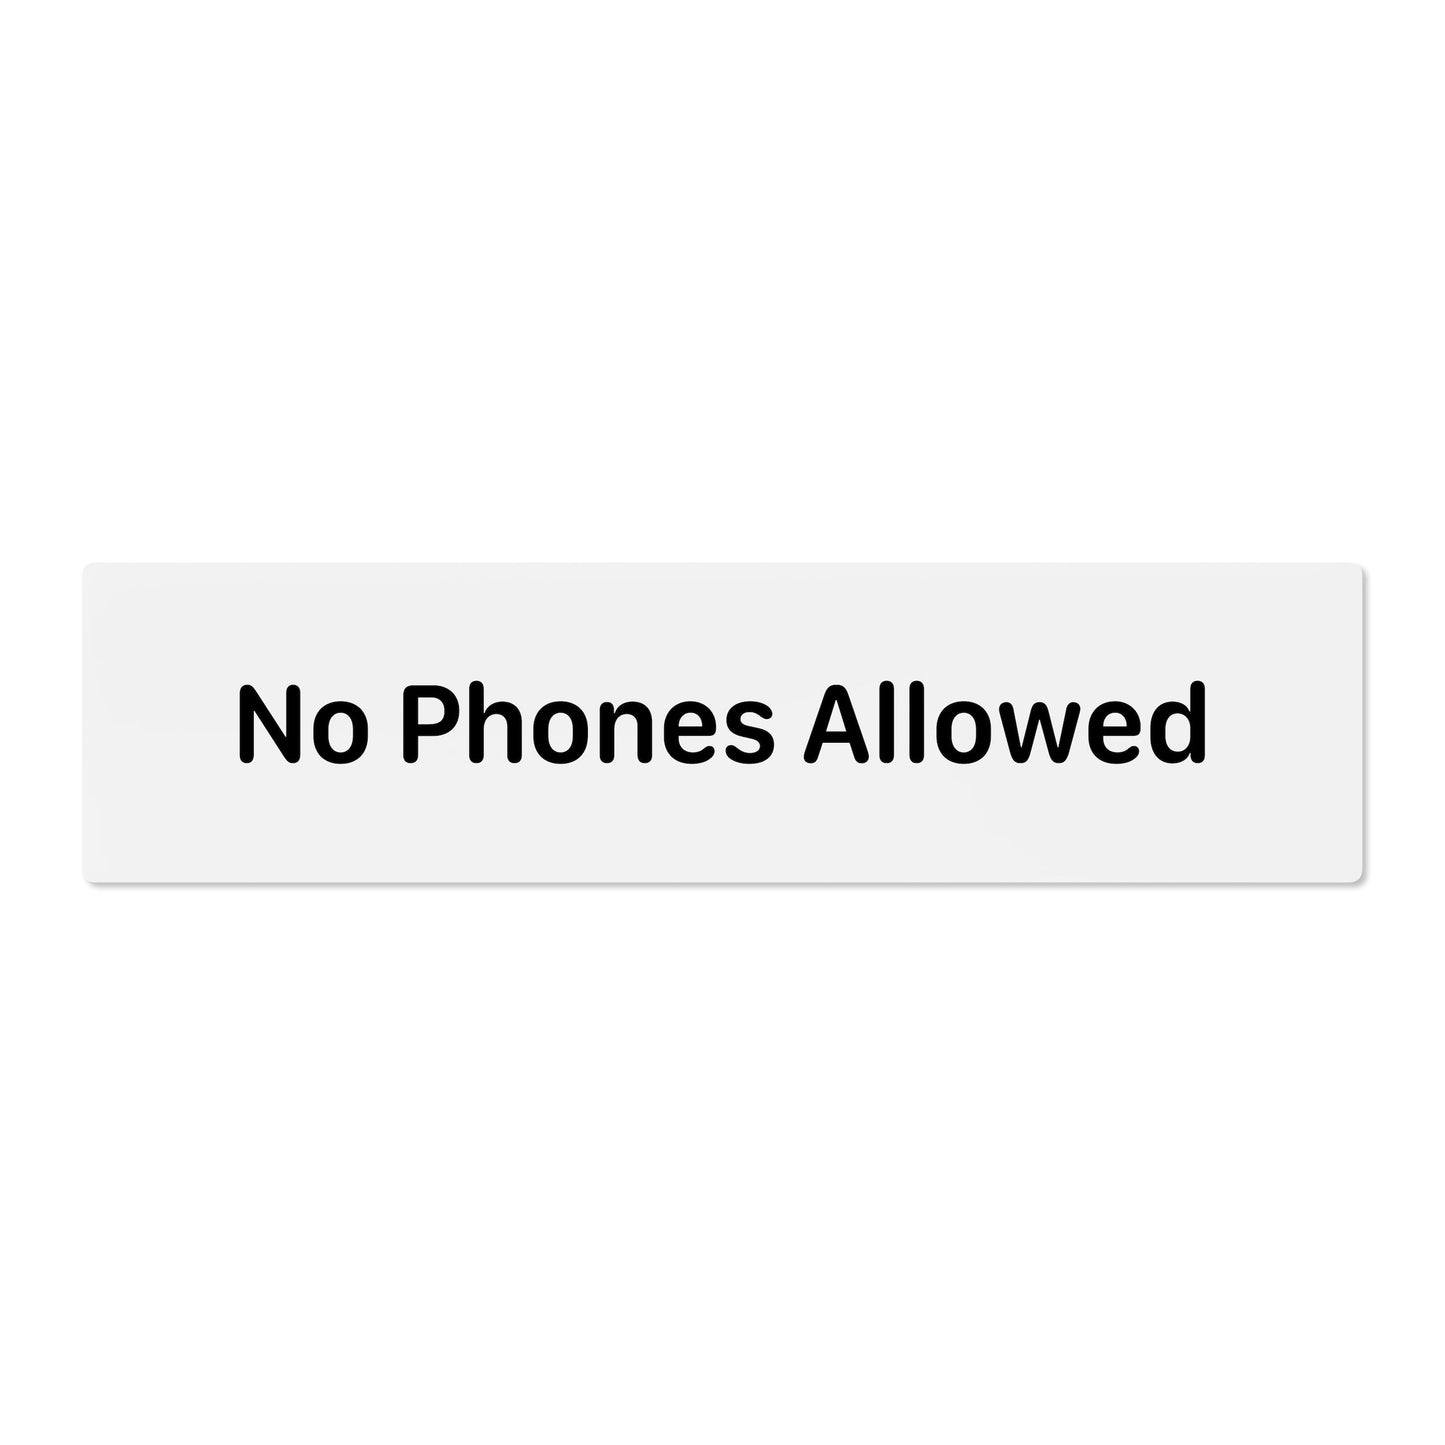 No Phones Allowed